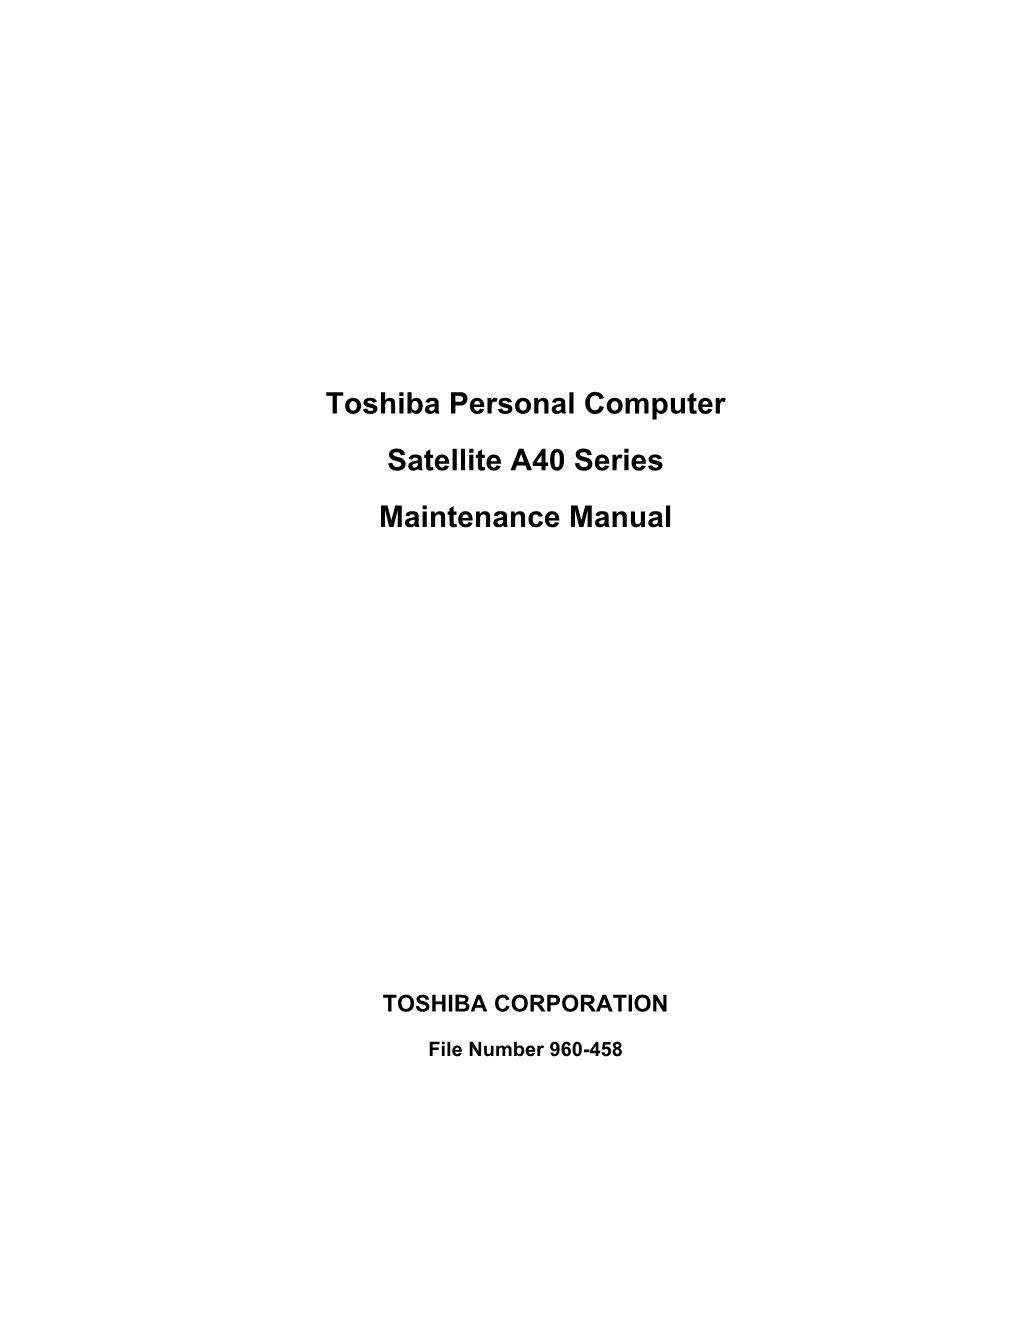 Toshiba Personal Computer Satellite A40 Series Maintenance Manual